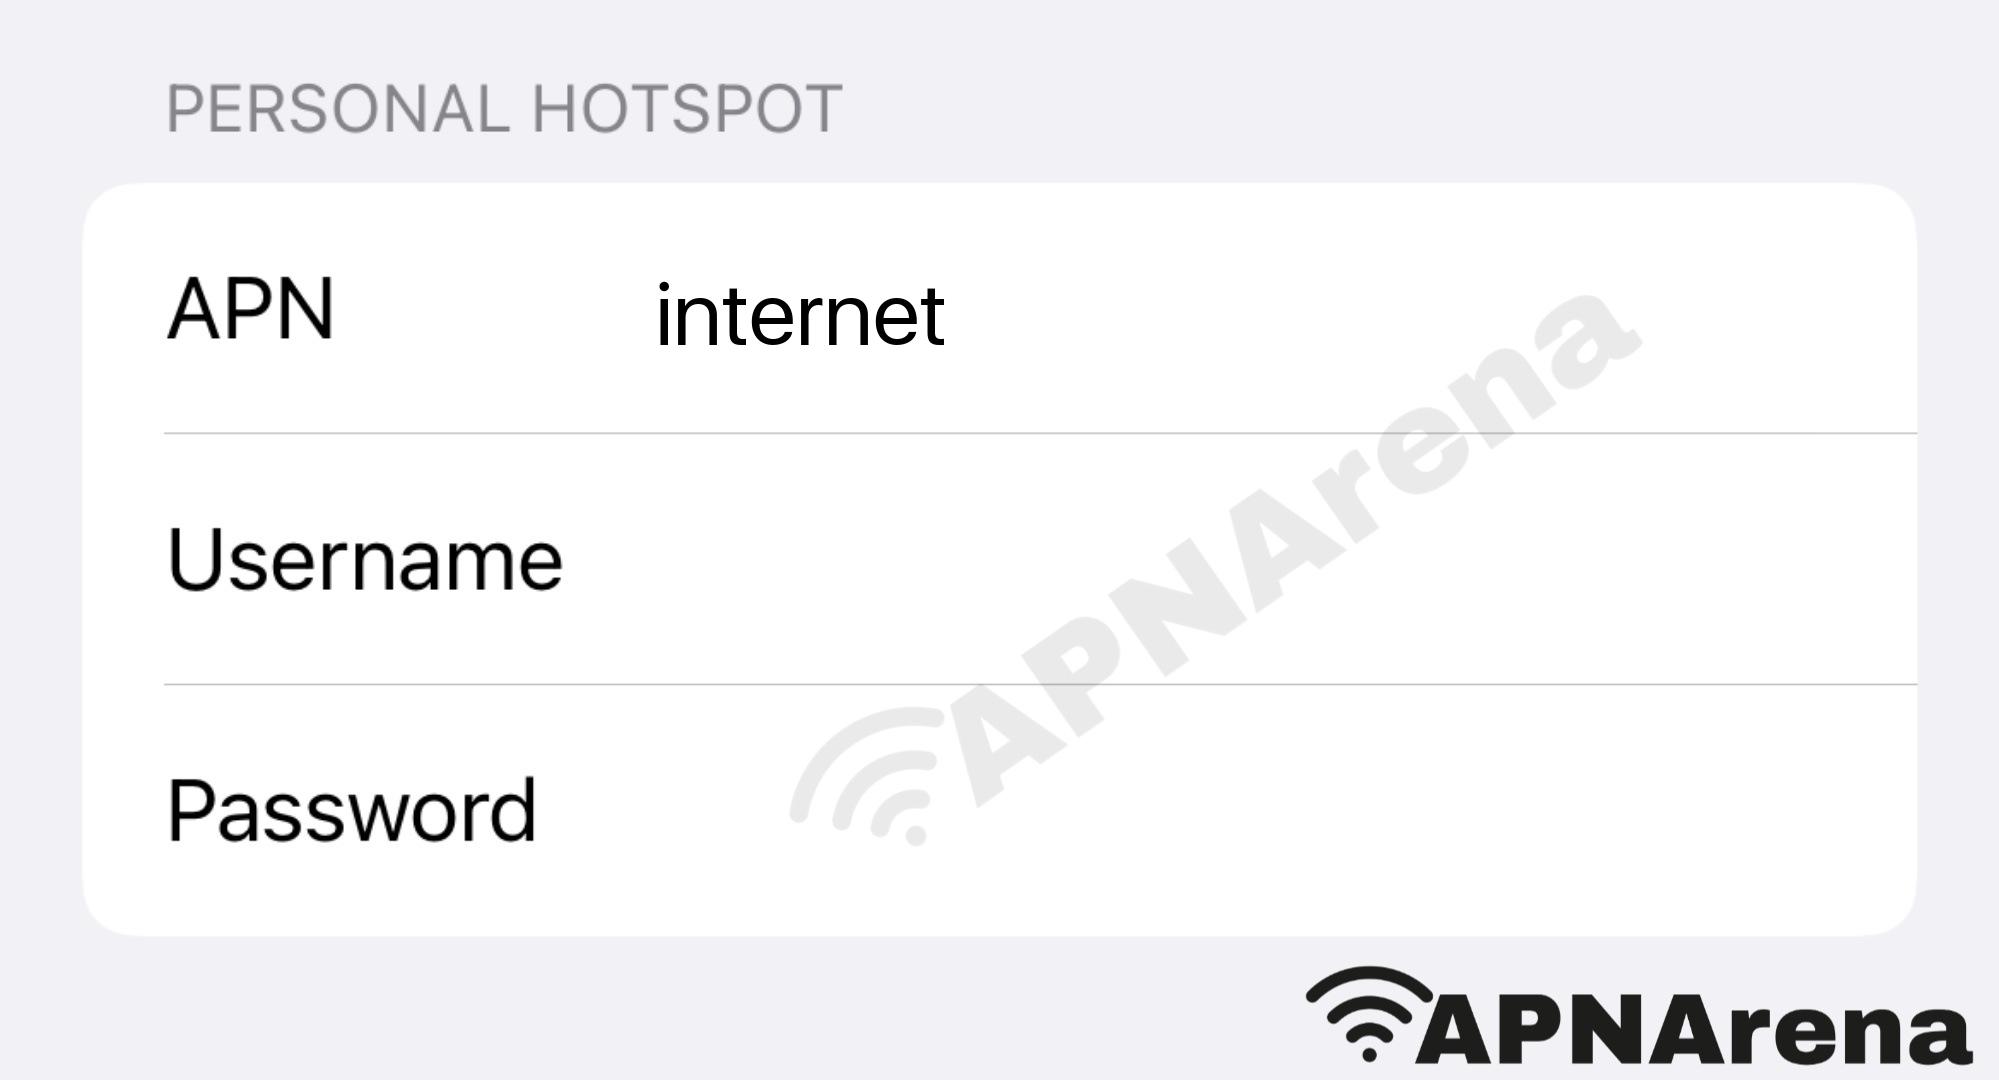 Q-Telecom Personal Hotspot Settings for iPhone